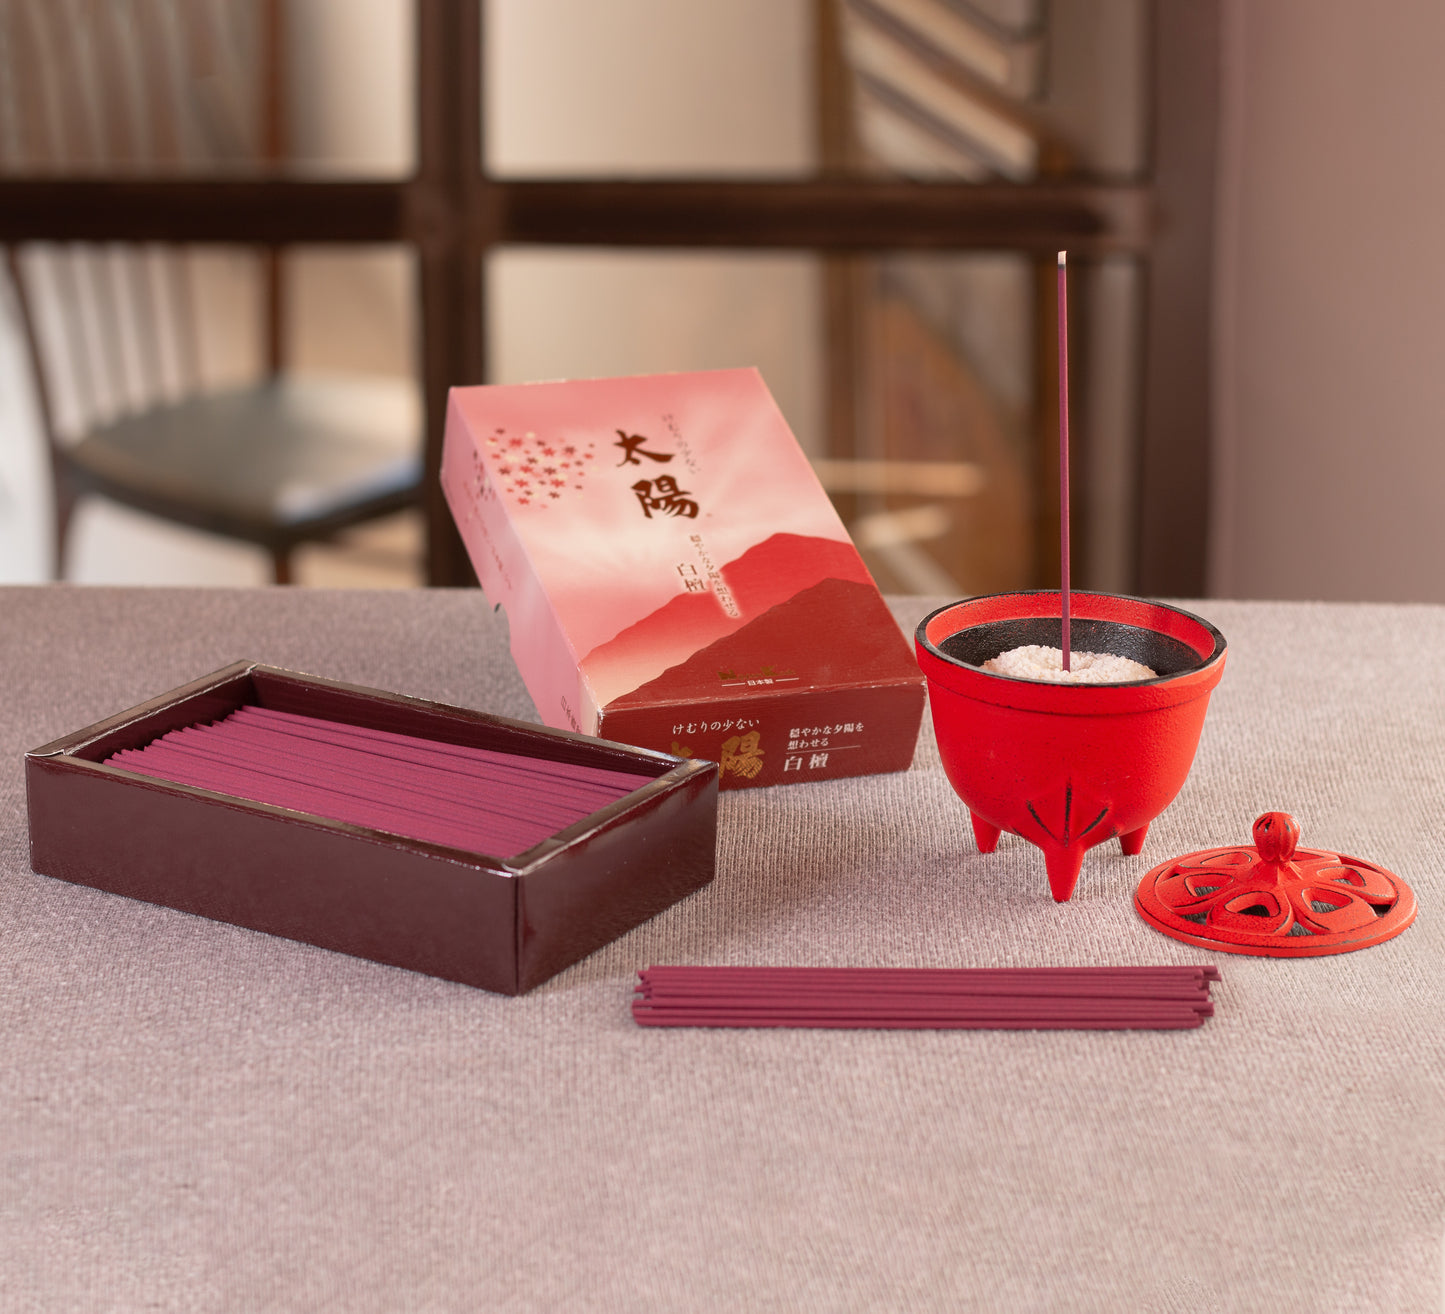 Taiyo Incense - Byakudan Sandalwood, Large Box